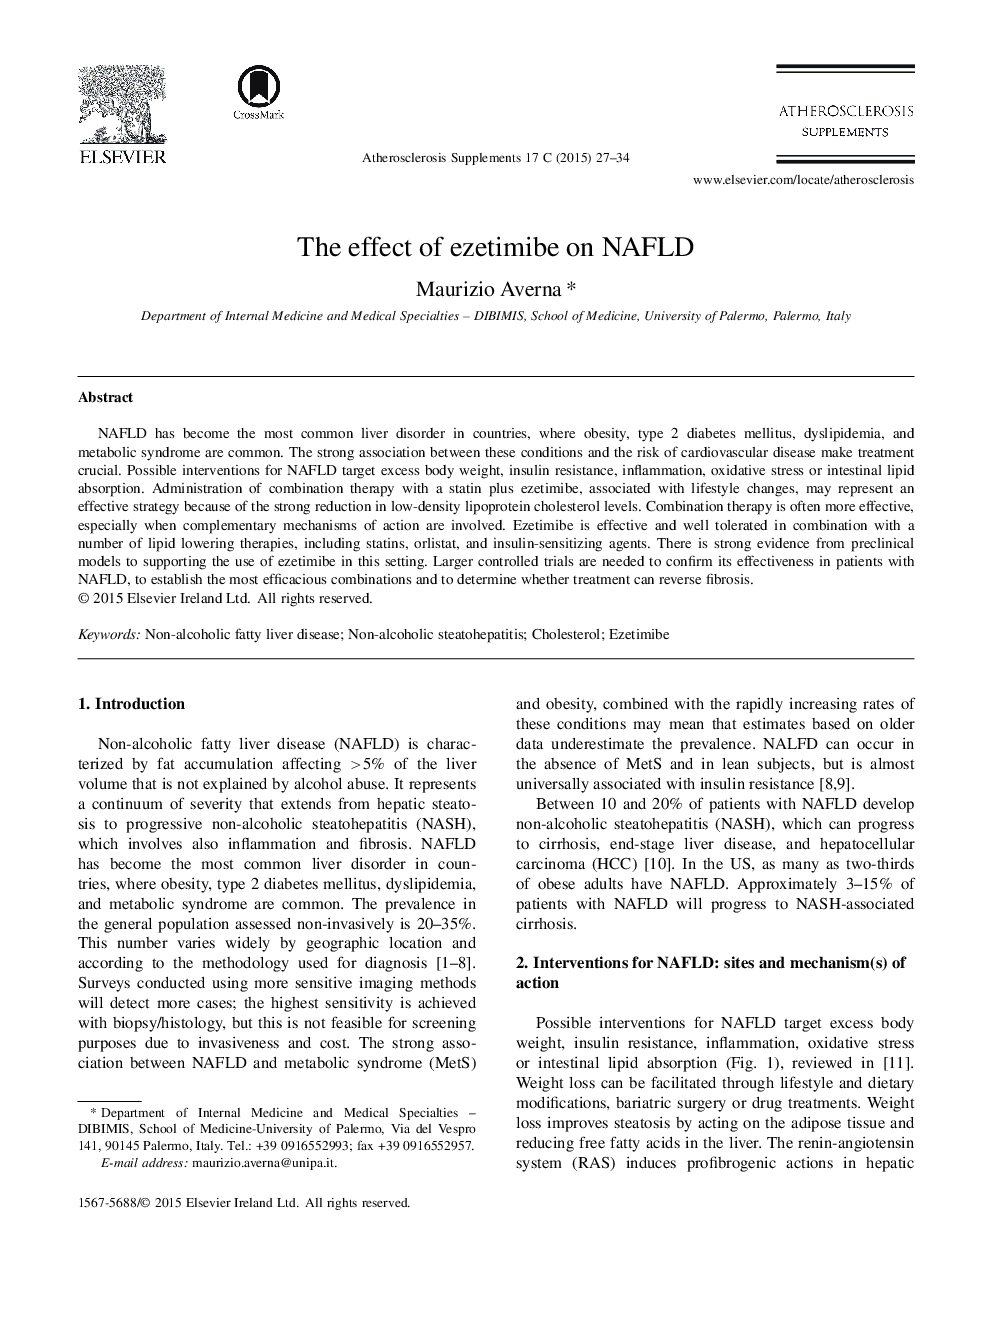 The effect of ezetimibe on NAFLD